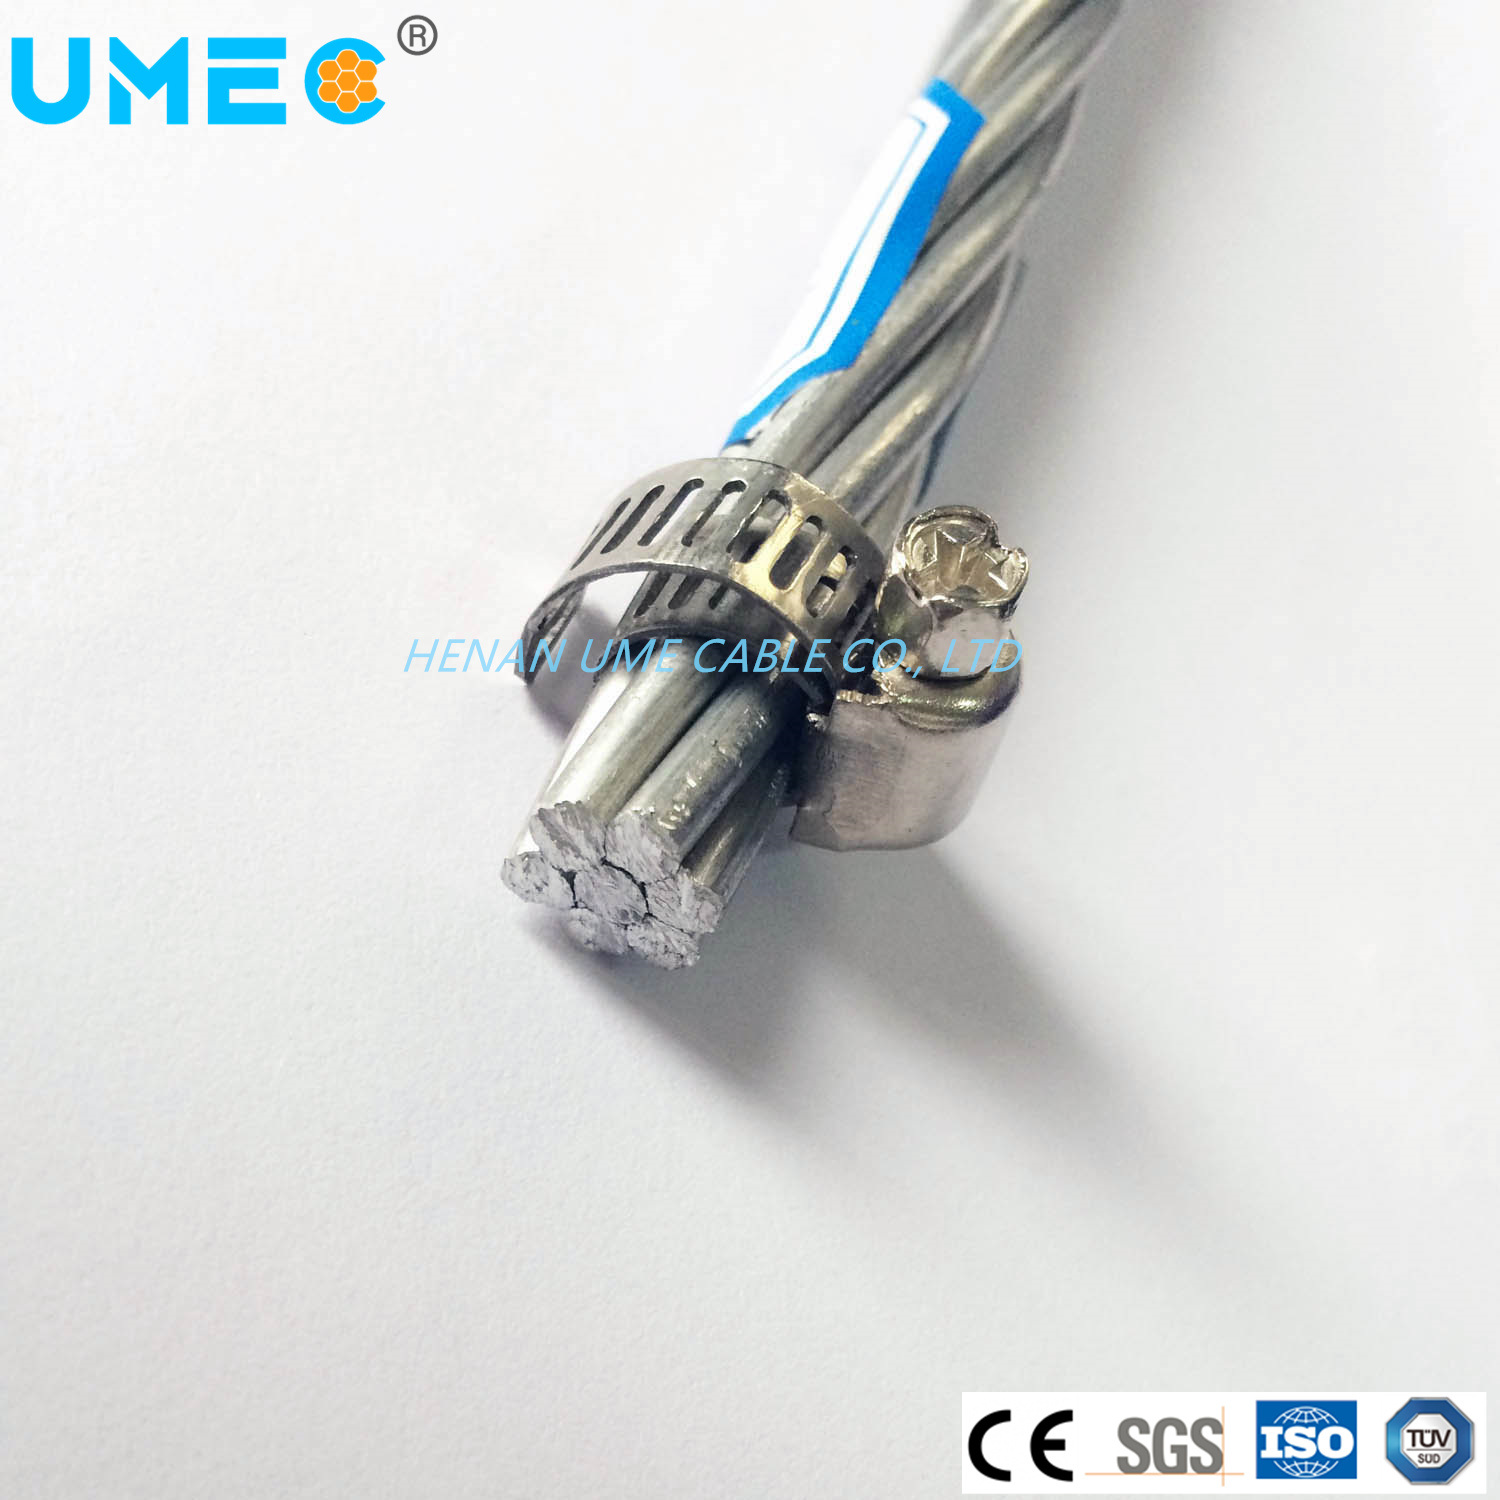 Cina 
                Fabbricato in Cina IEC 61089 Factory Direct overhead 50 mm2 70 mm2 Conduttore in alluminio AAC AAAC ACSR 150 mm2 240 mm2
              produzione e fornitore